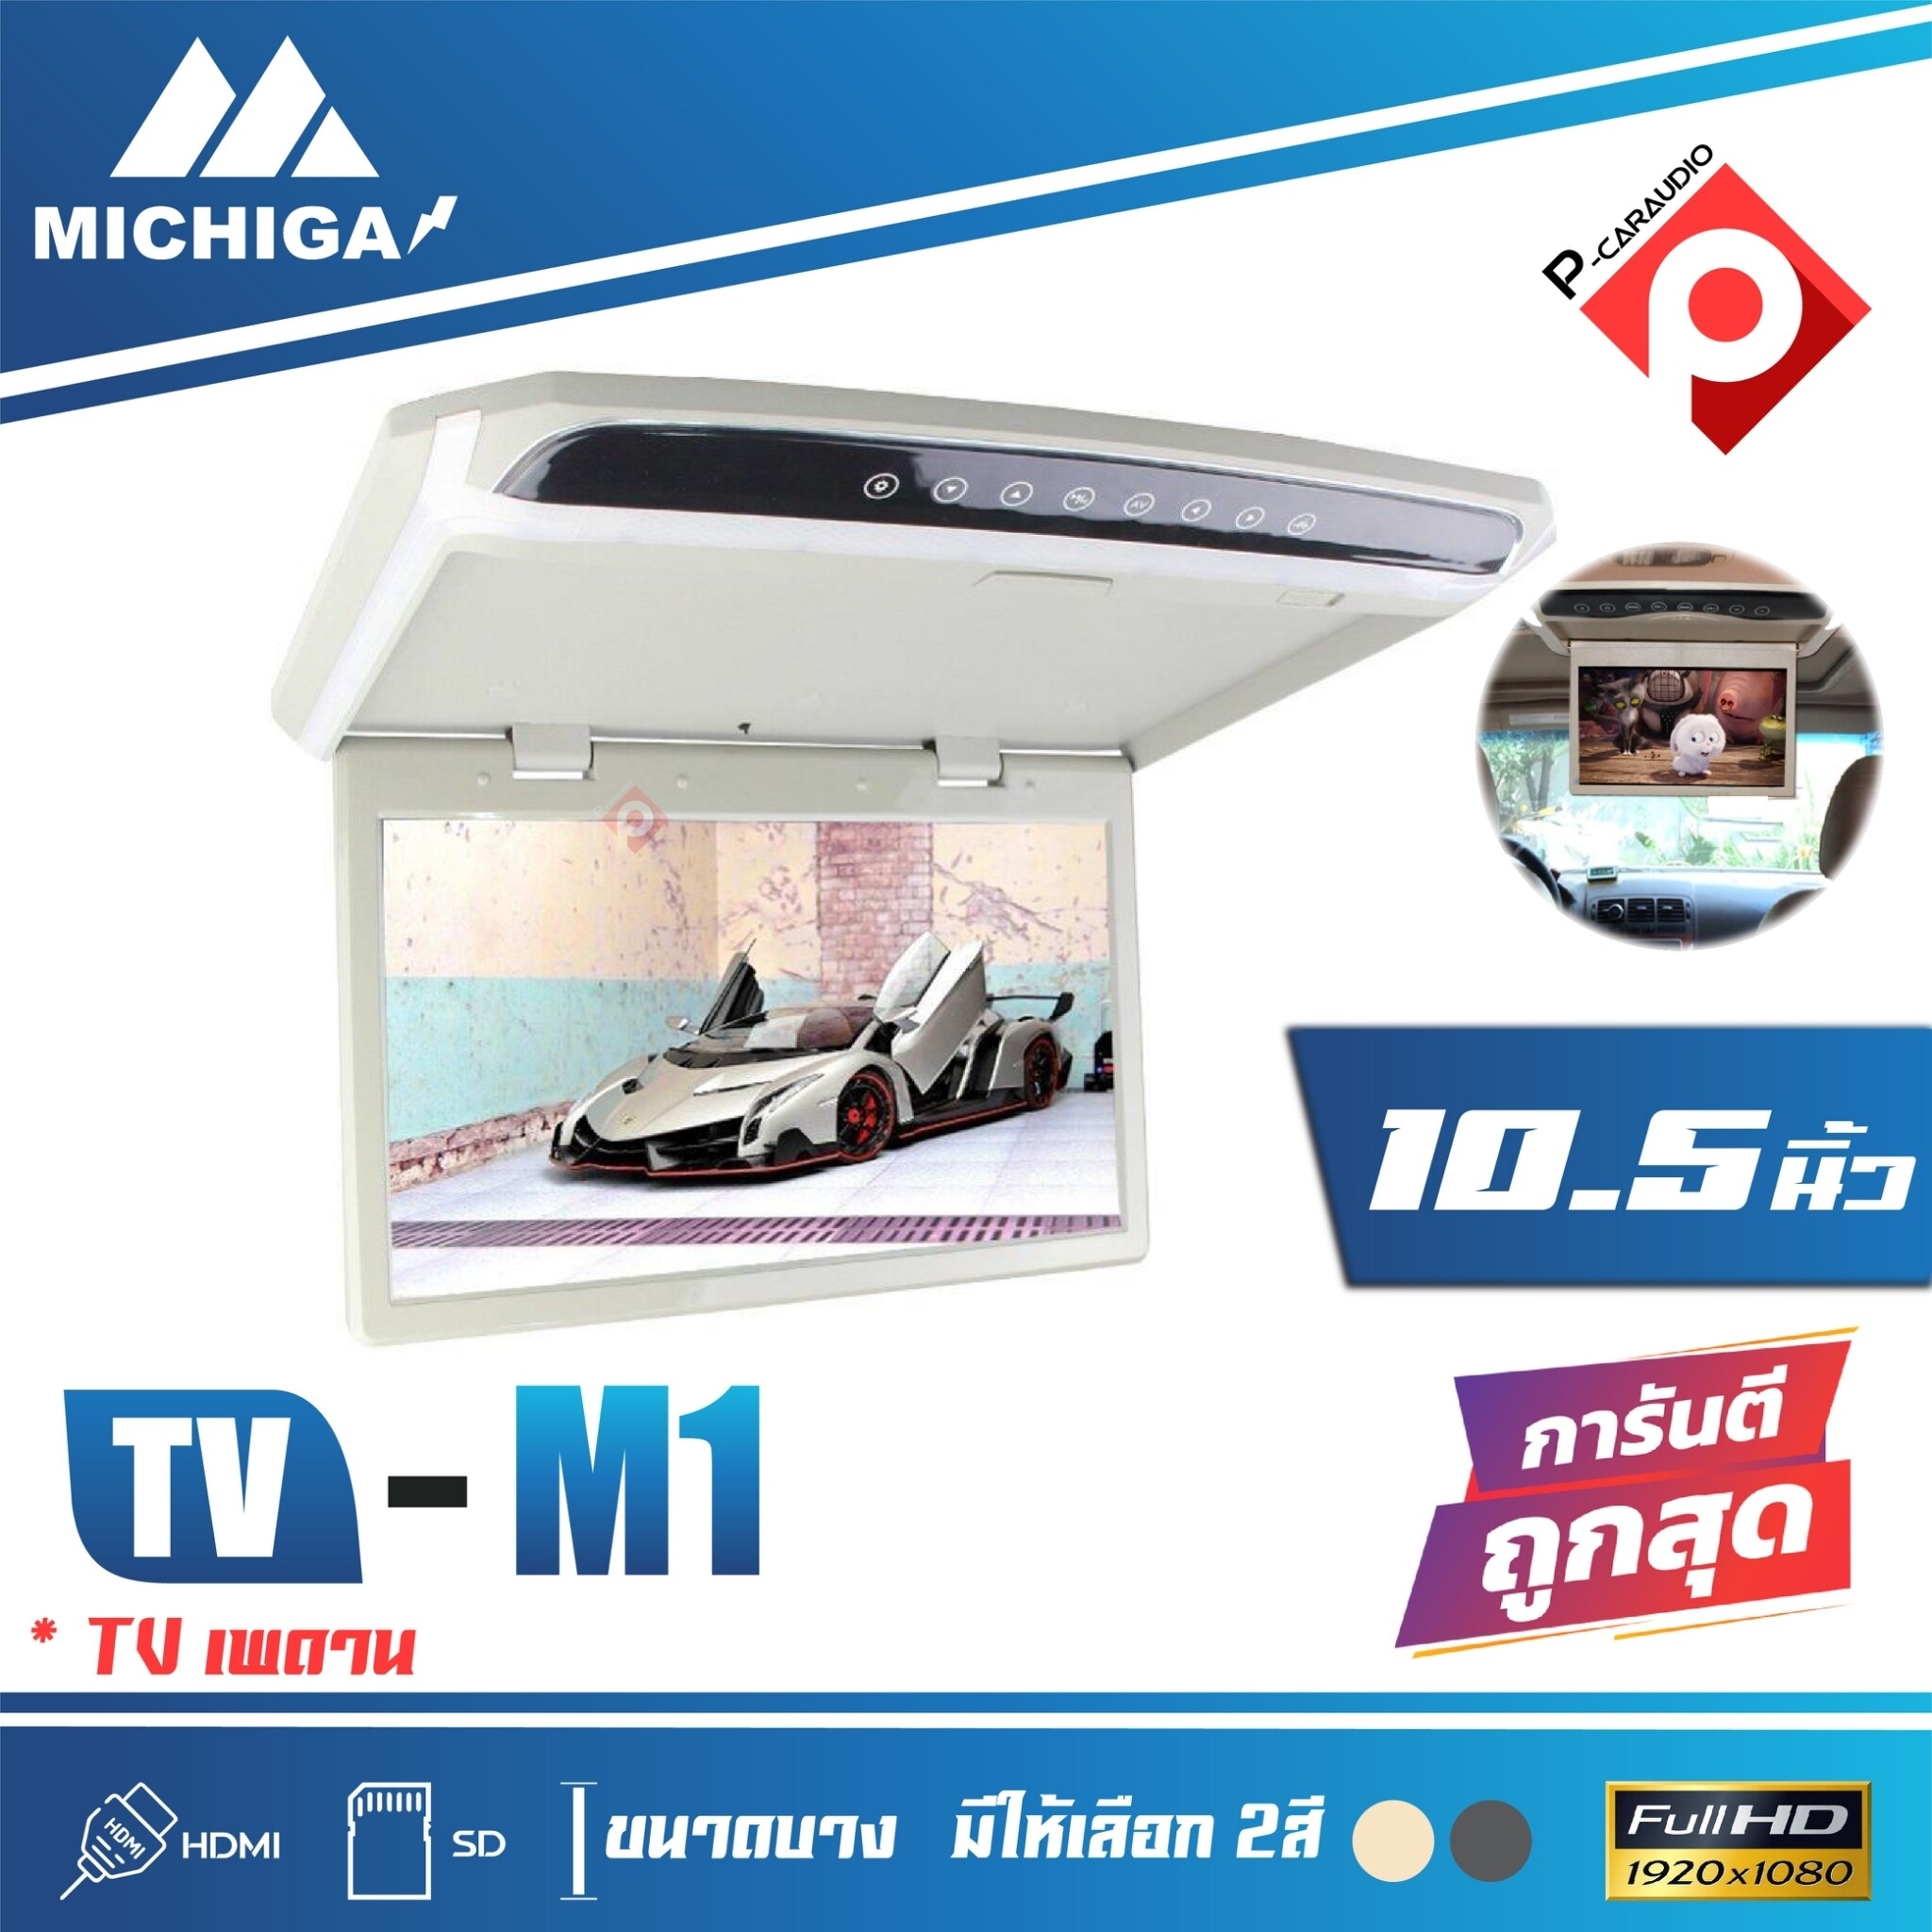 MICHIGA TVทีวีติดเพดานรถยนต์ จอขนาด 10.5